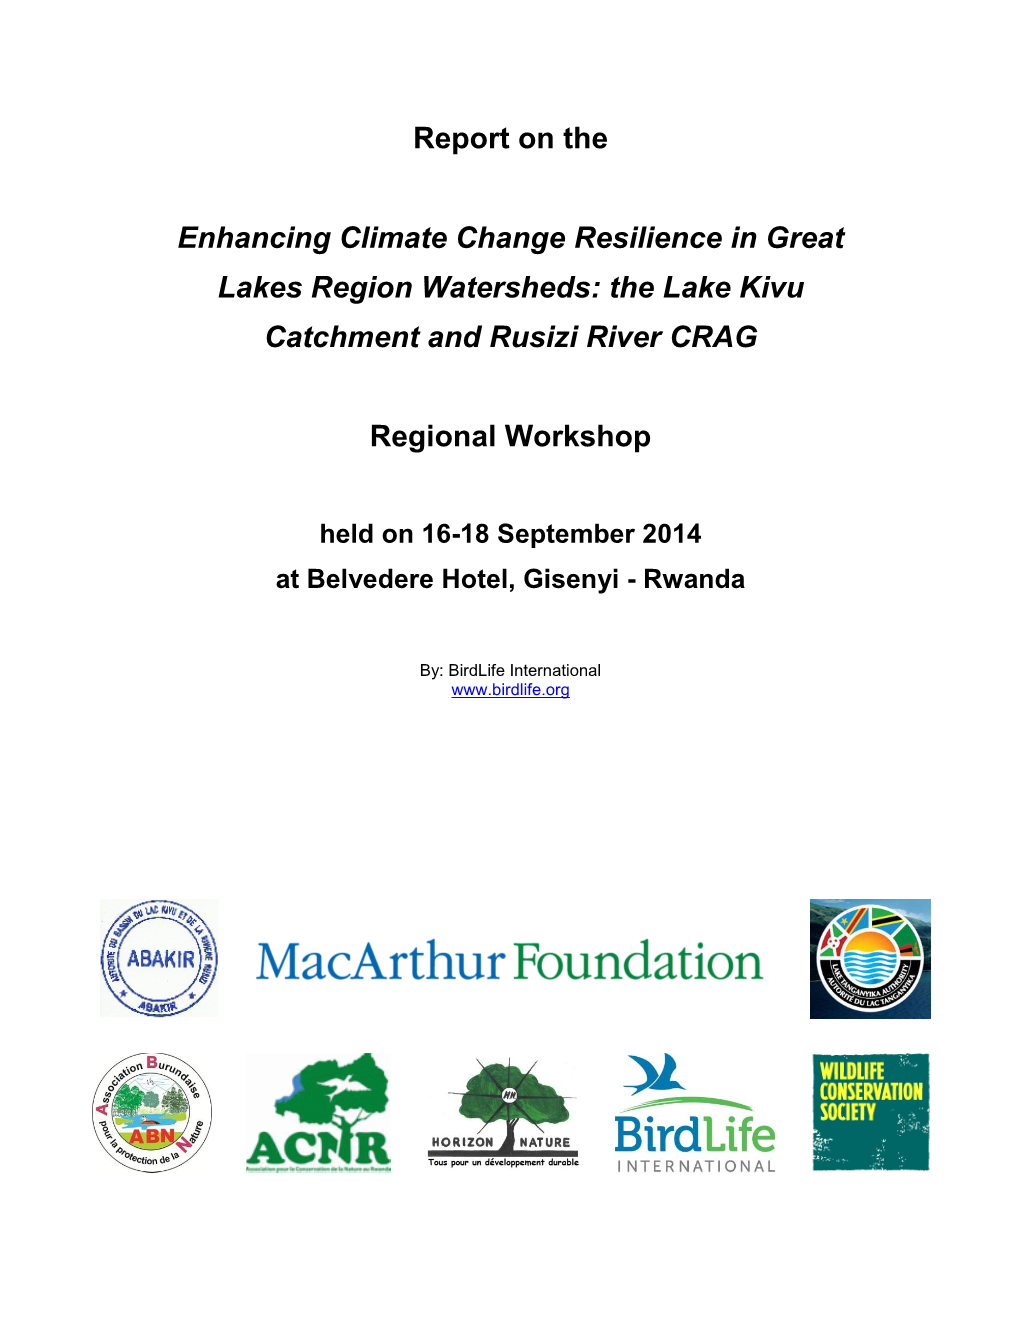 The Lake Kivu Catchment and Rusizi River CRAG Regional Workshop